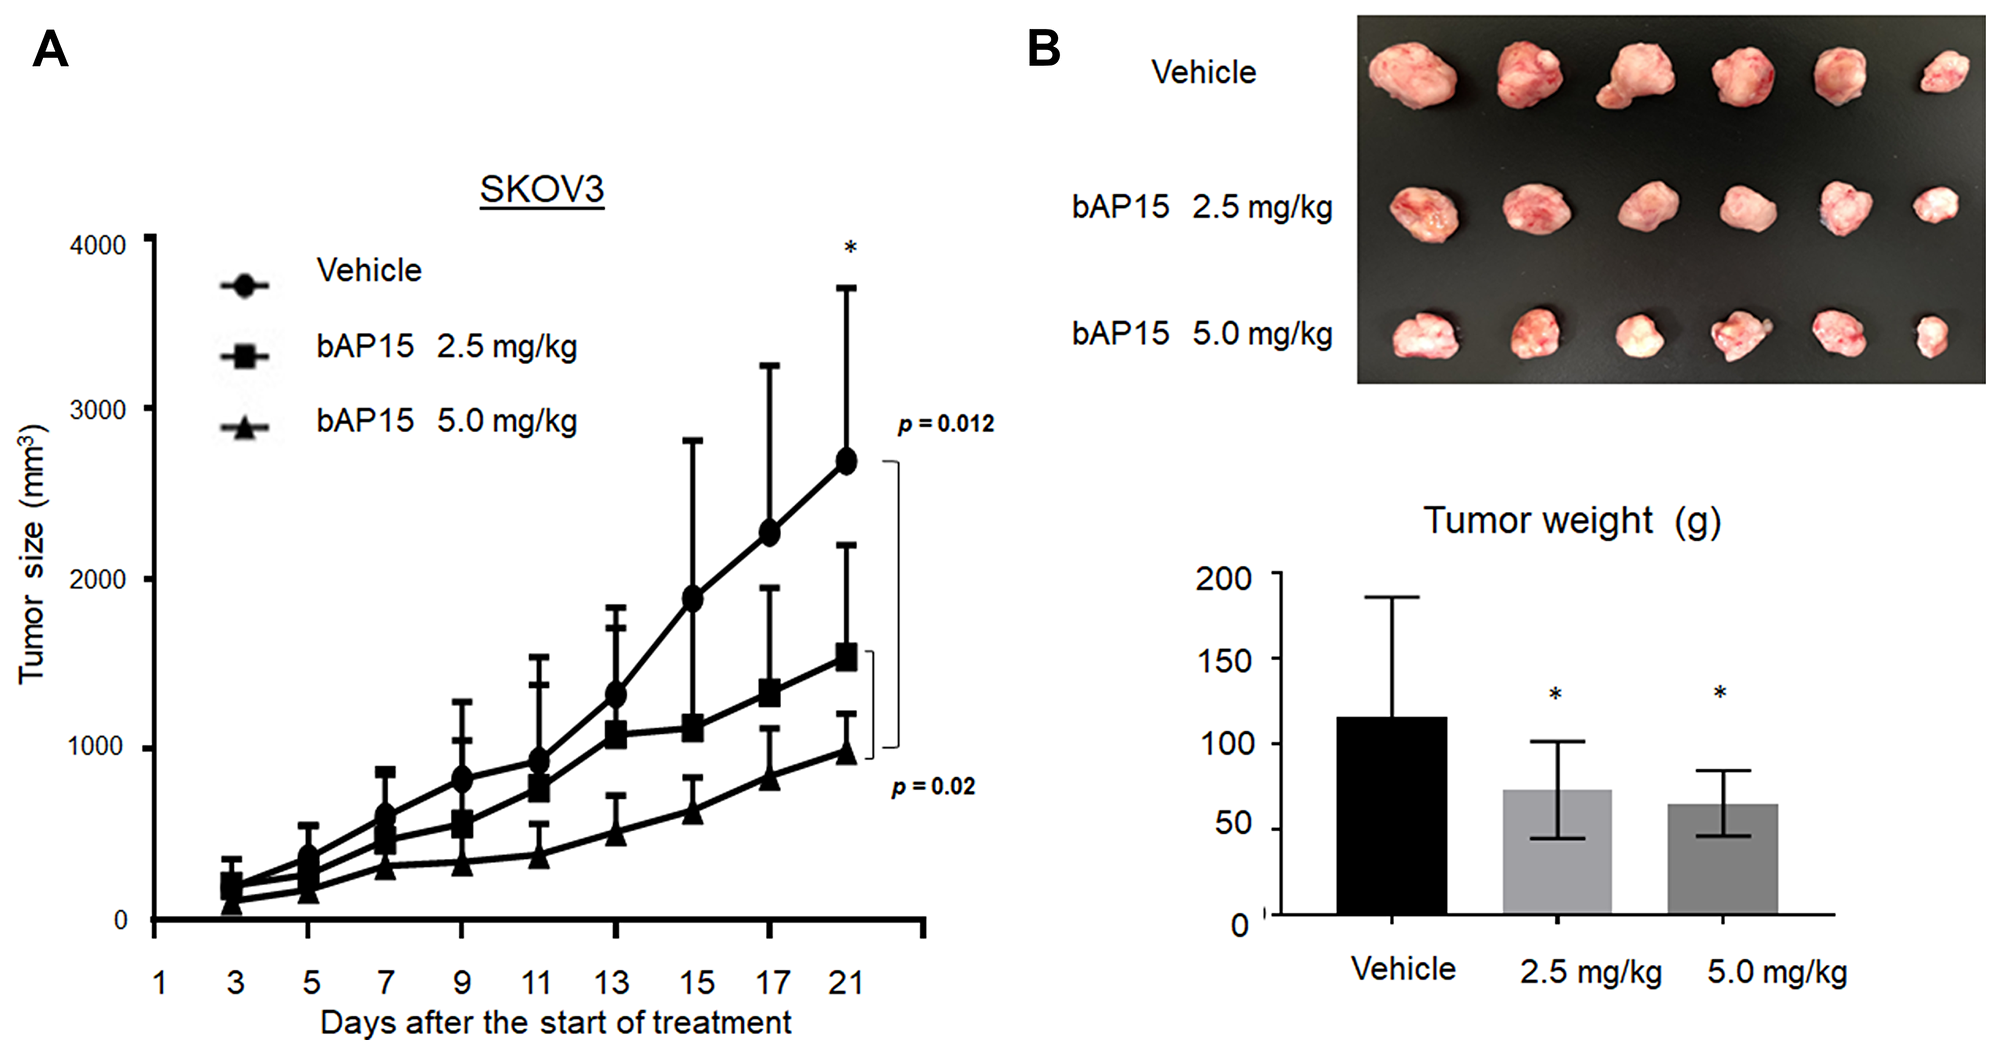 In vivo effect of bAP15 intraperitoneal treatment using SKOV3 xenograft mice models.